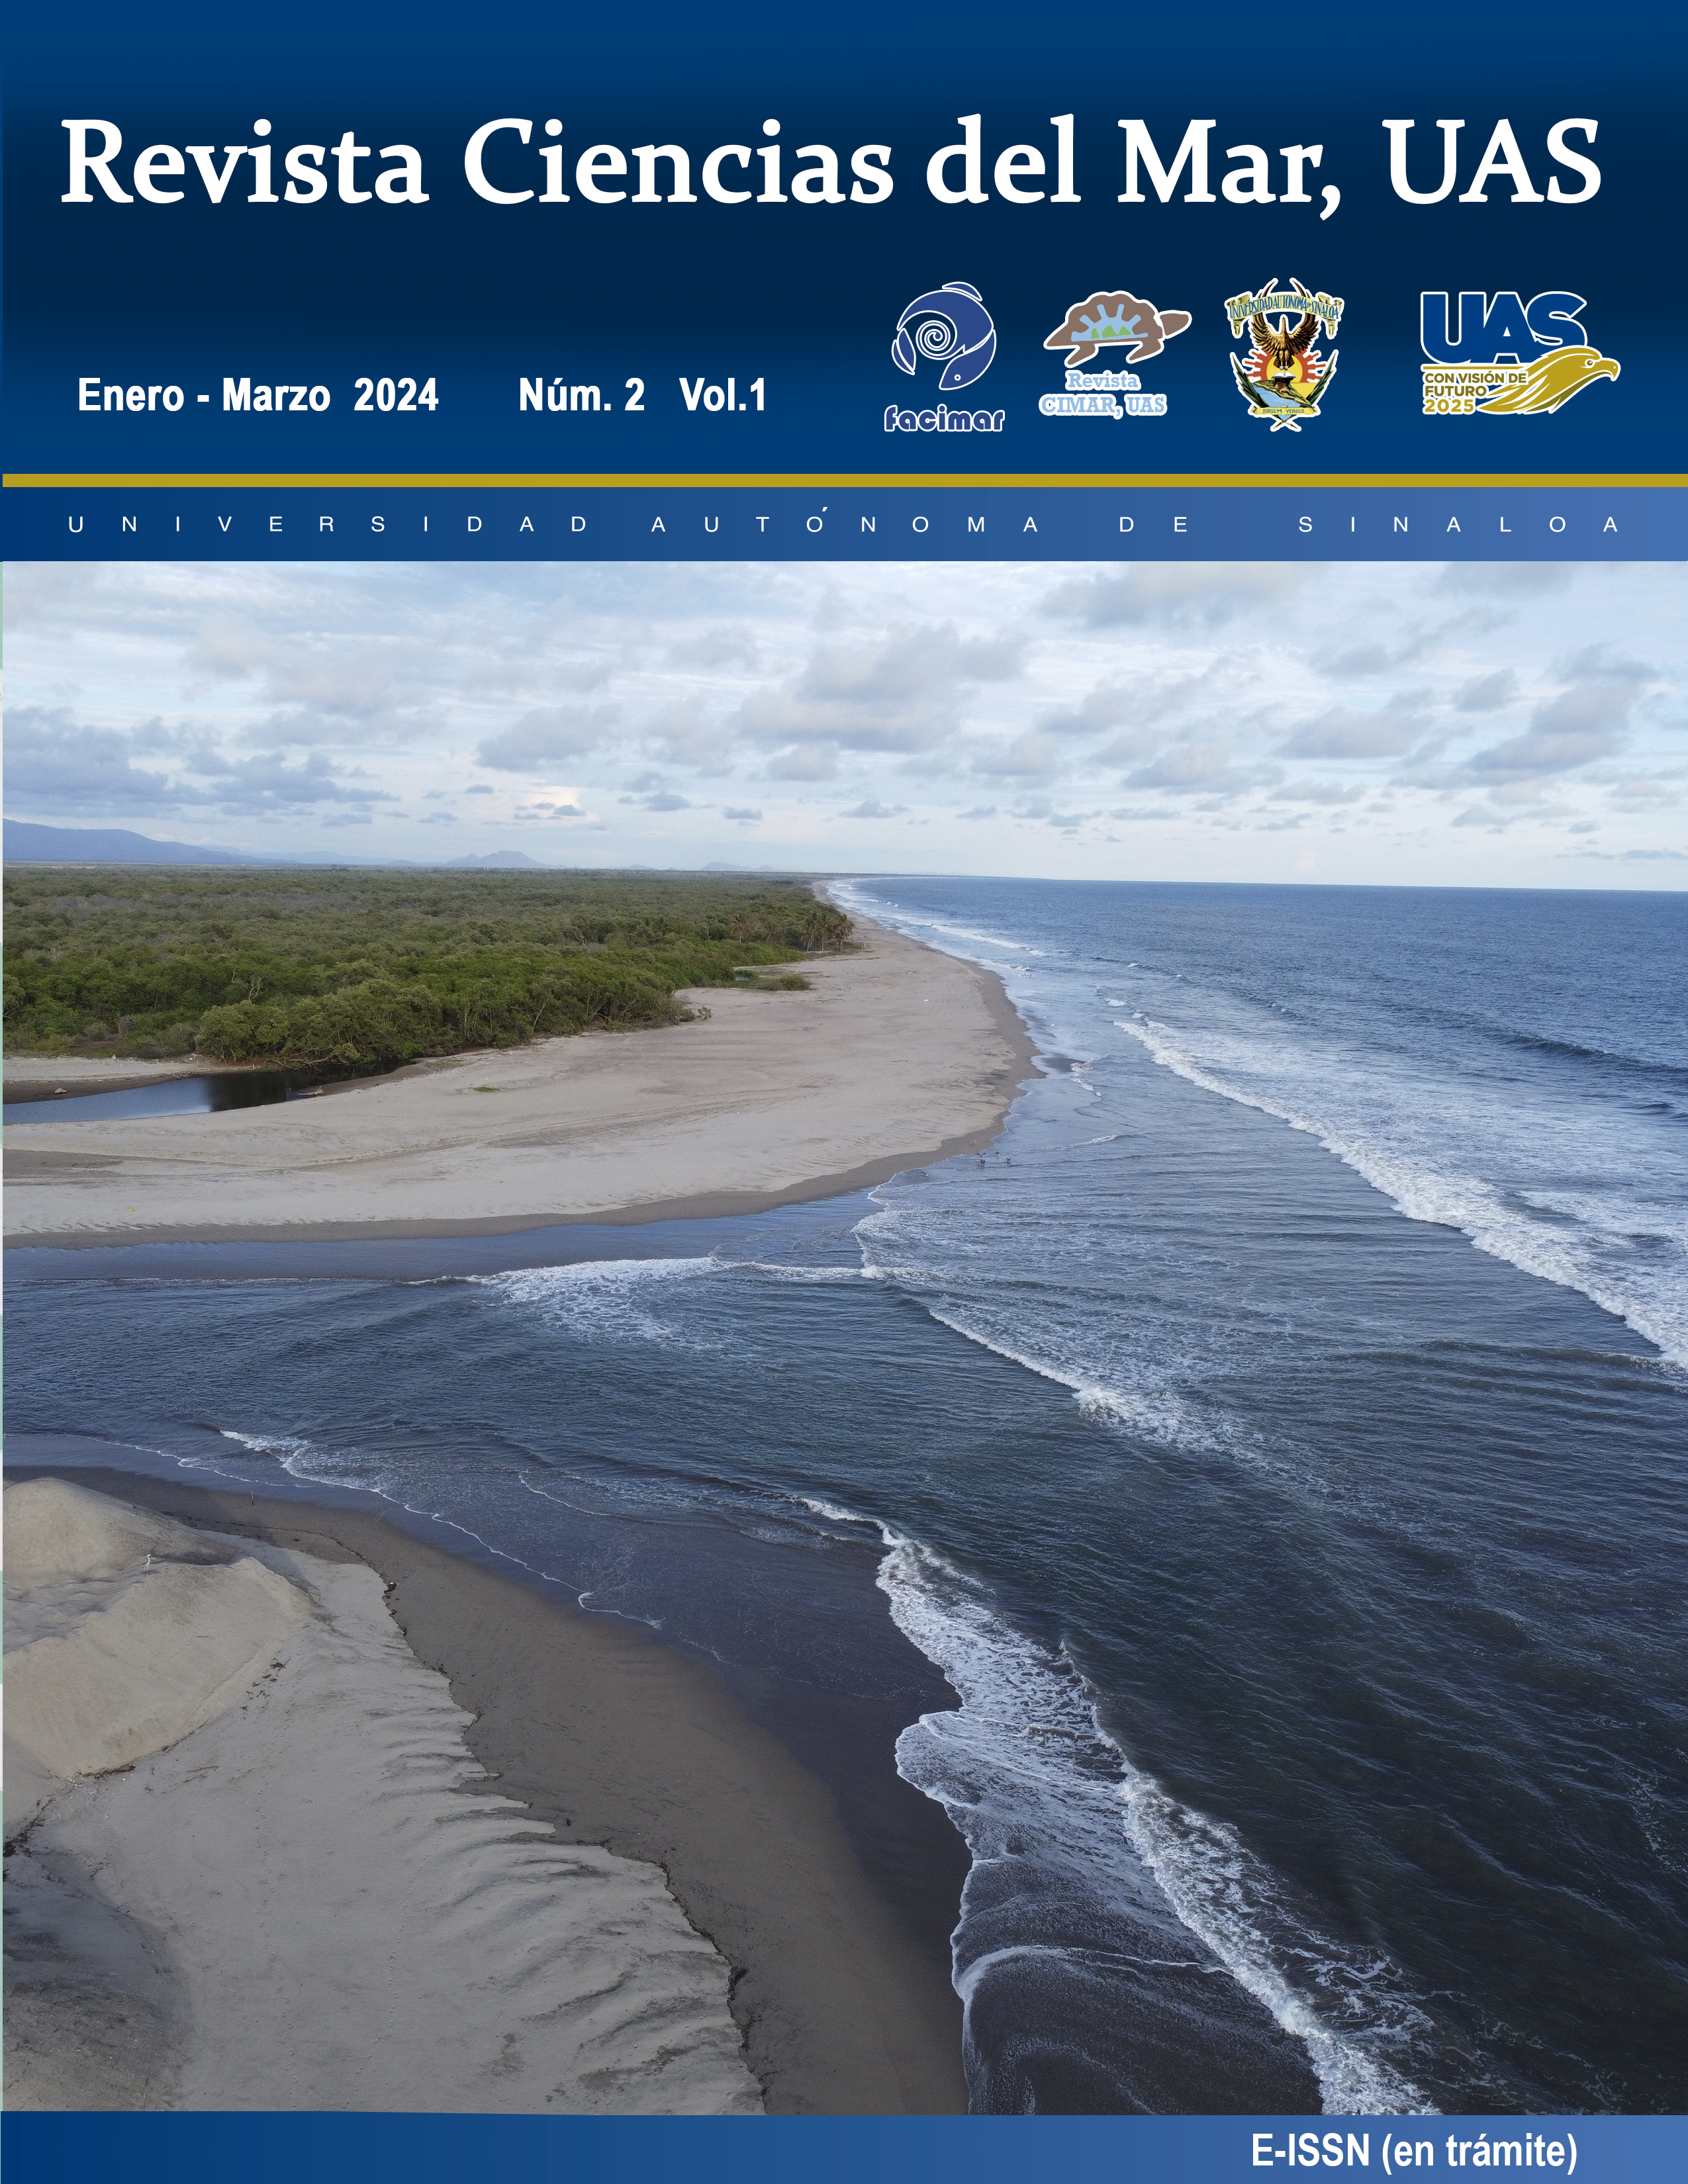 Núm. 2 Vol. 1 Revista Ciencias del Mar, UAS.